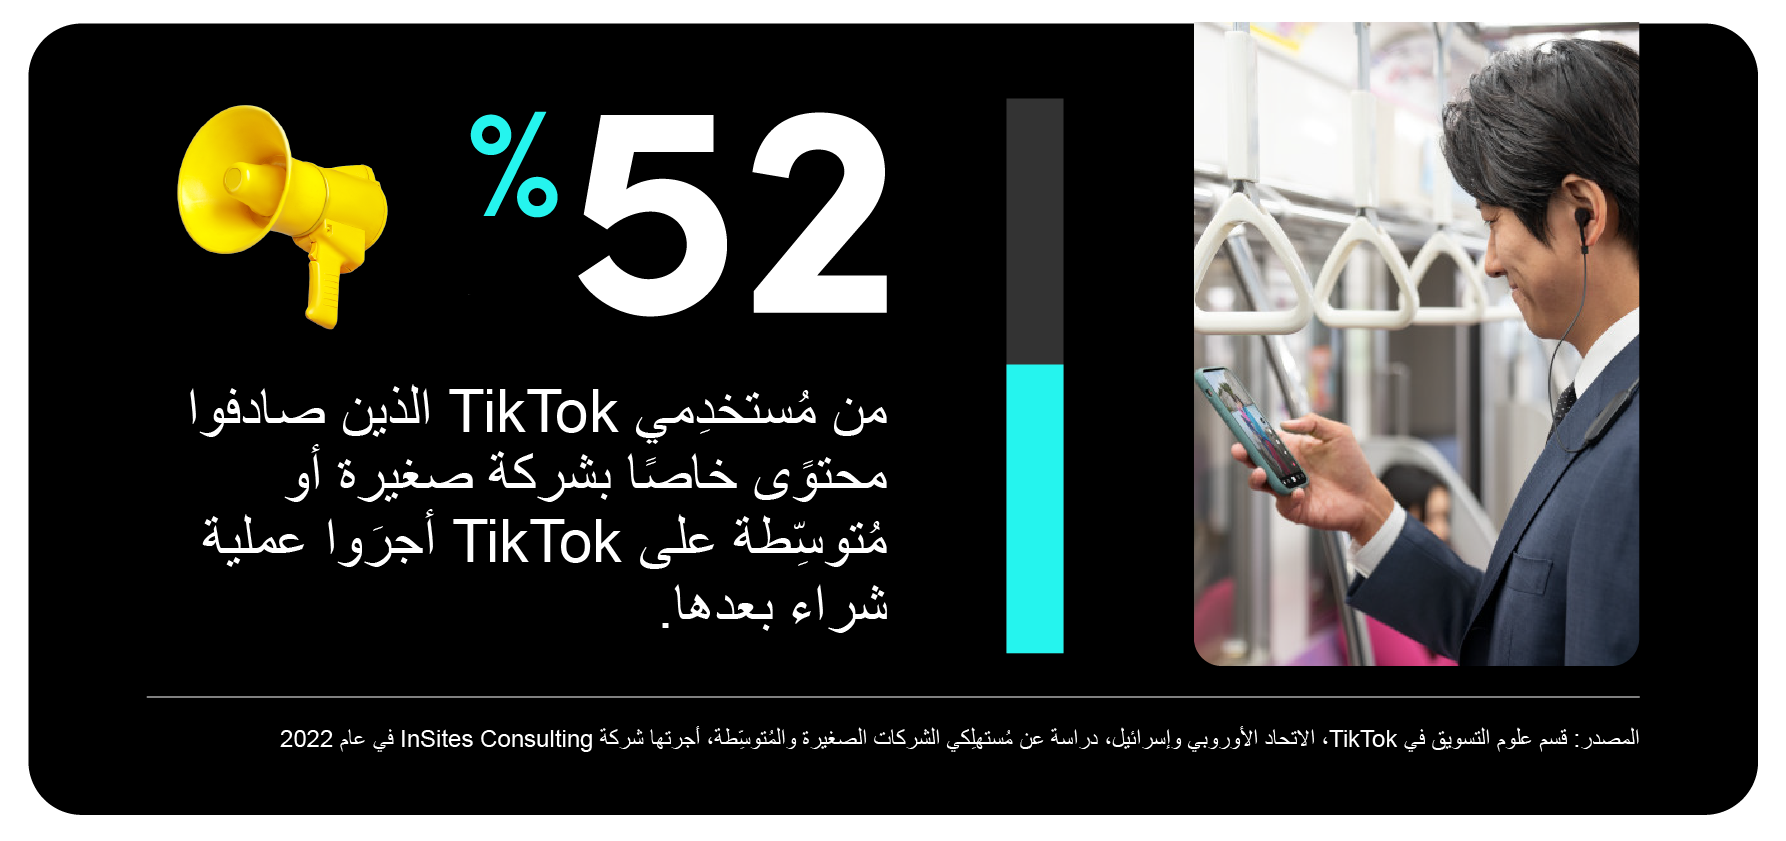 TikTok users purchase